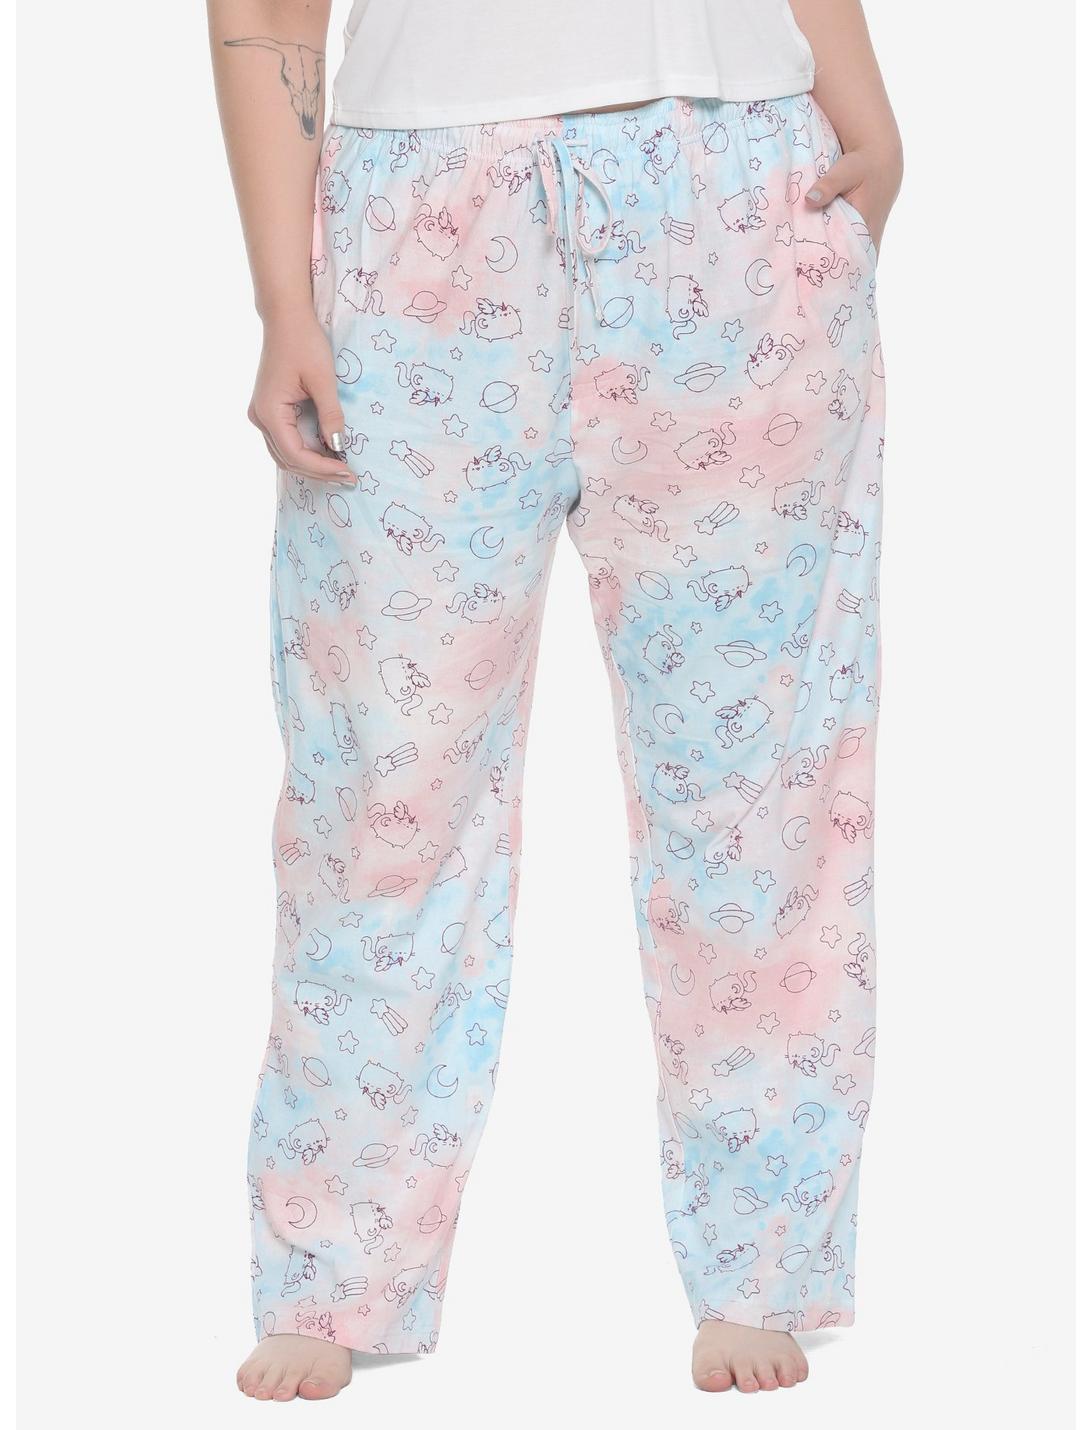 Pusheen Pastel Tie Dye Space Pusheenicorn Girls Pajama Pants Plus Size, MULTICOLOR, hi-res